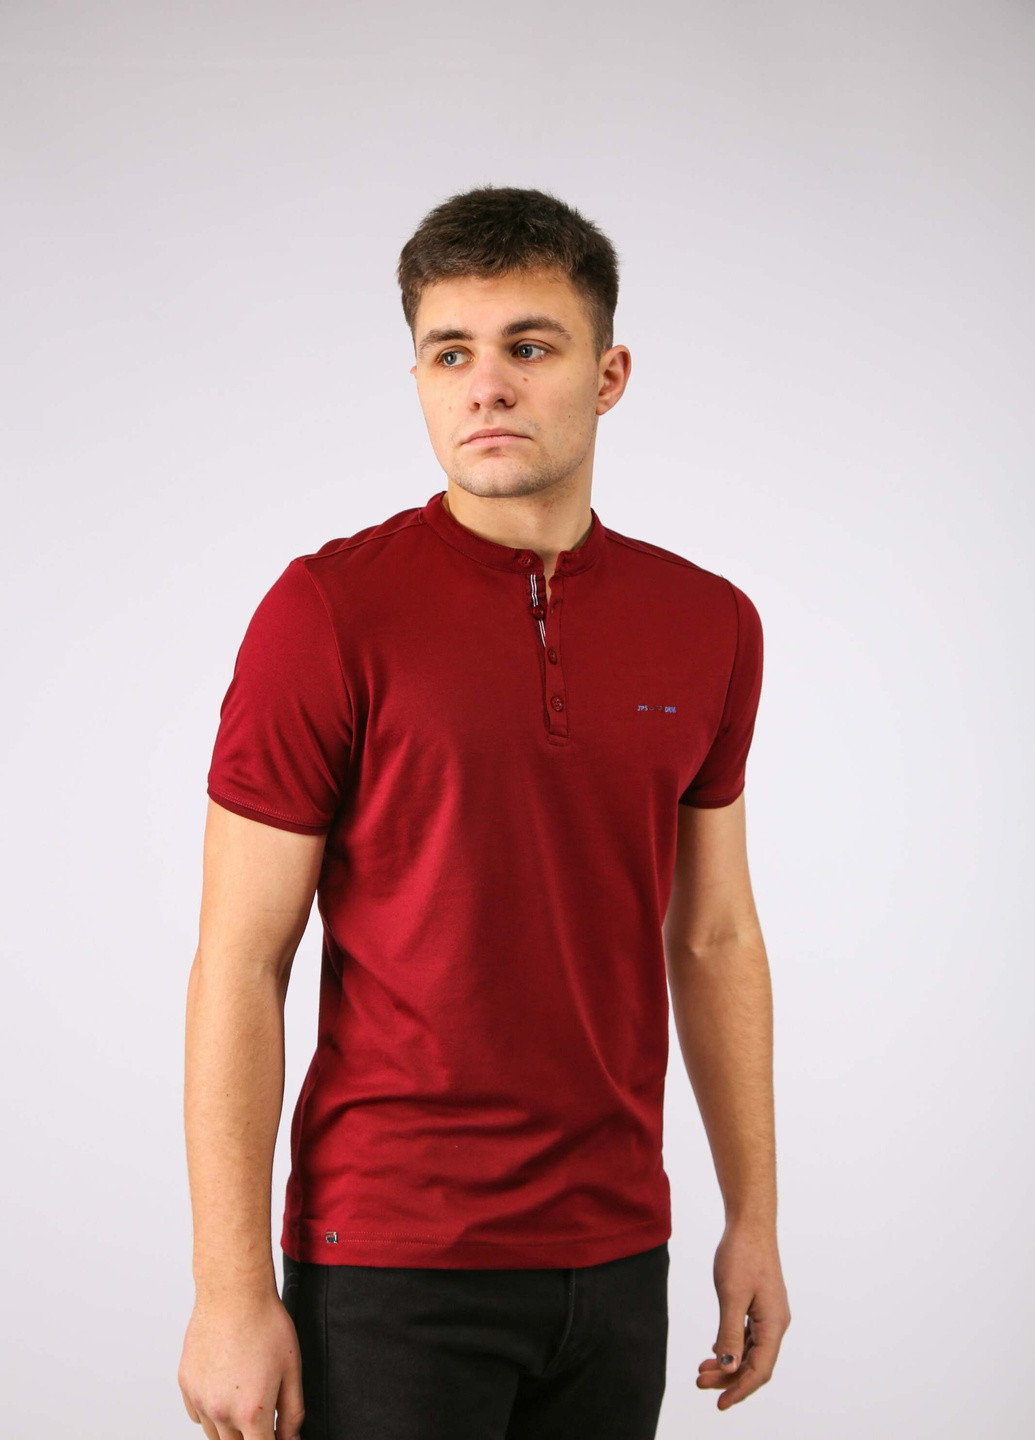 Бордовая футболка-футболка jp7153 2xl бордовый (2000903914846) для мужчин Jean Piere однотонная